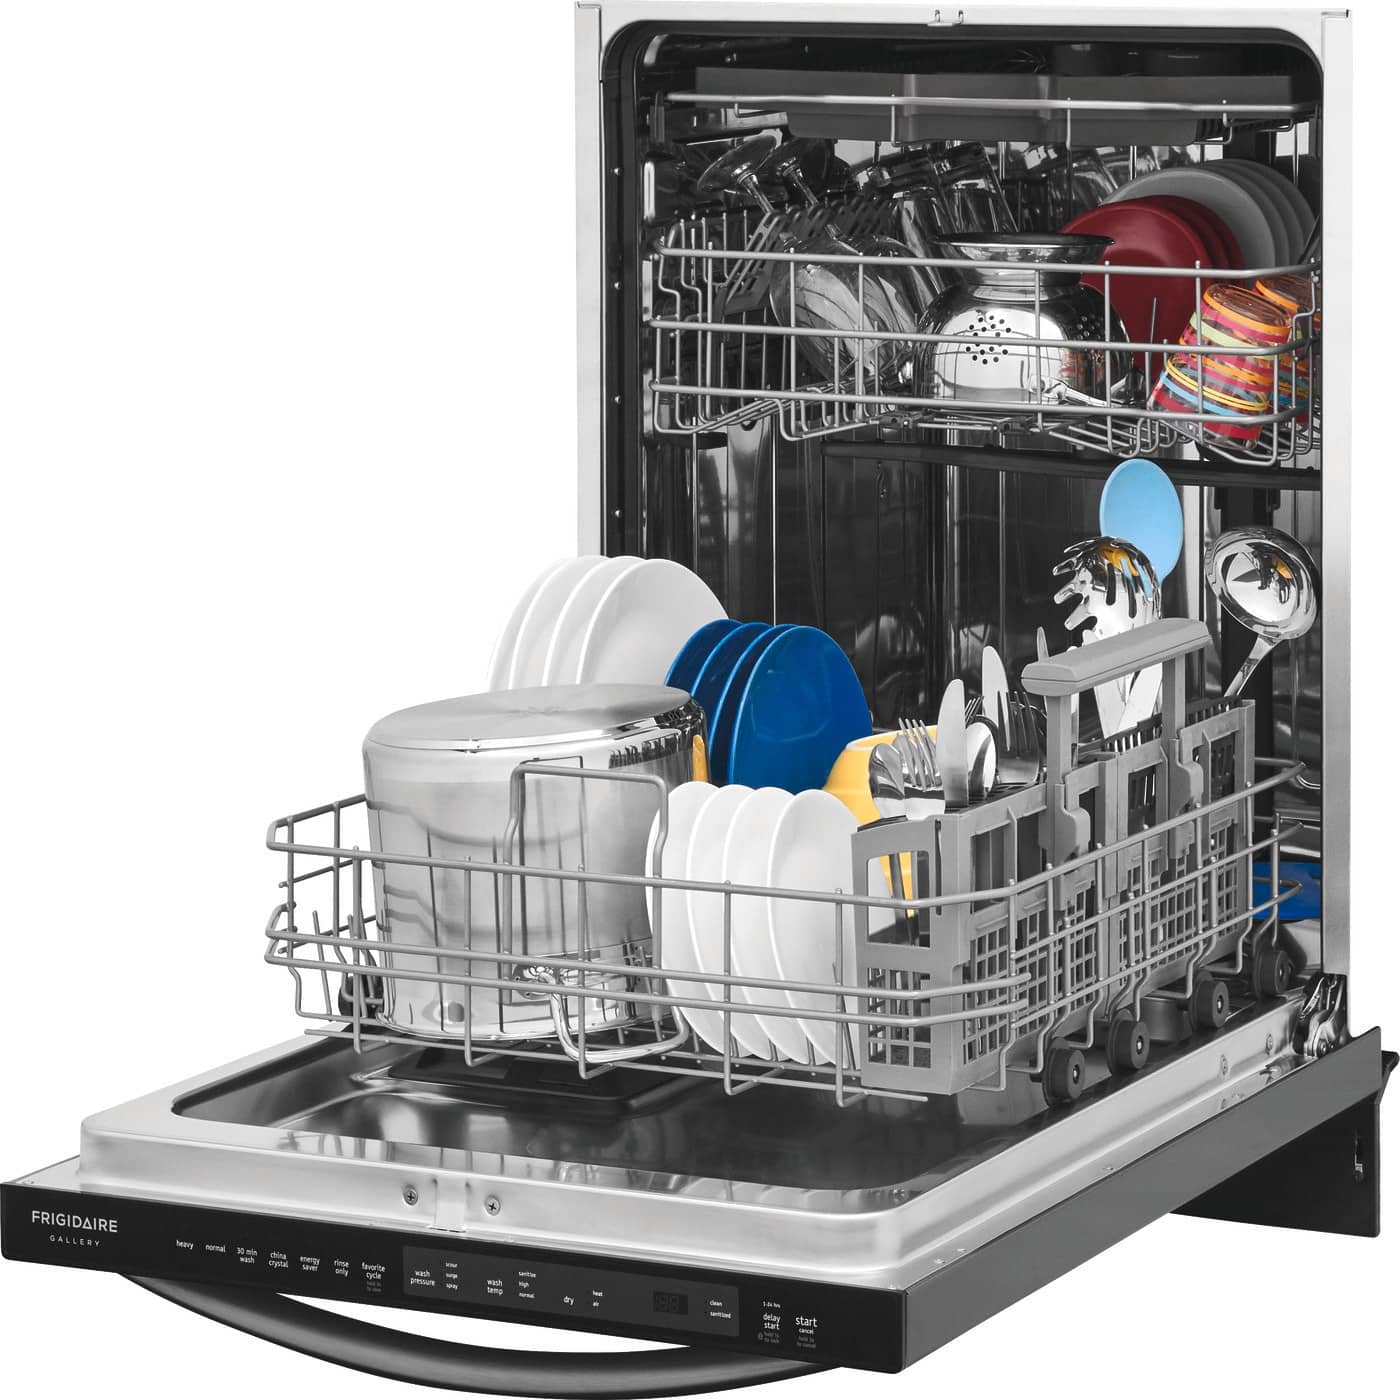 Frigidaire Dishwasher Not Washing: 8 Easy Ways To Fix It Now